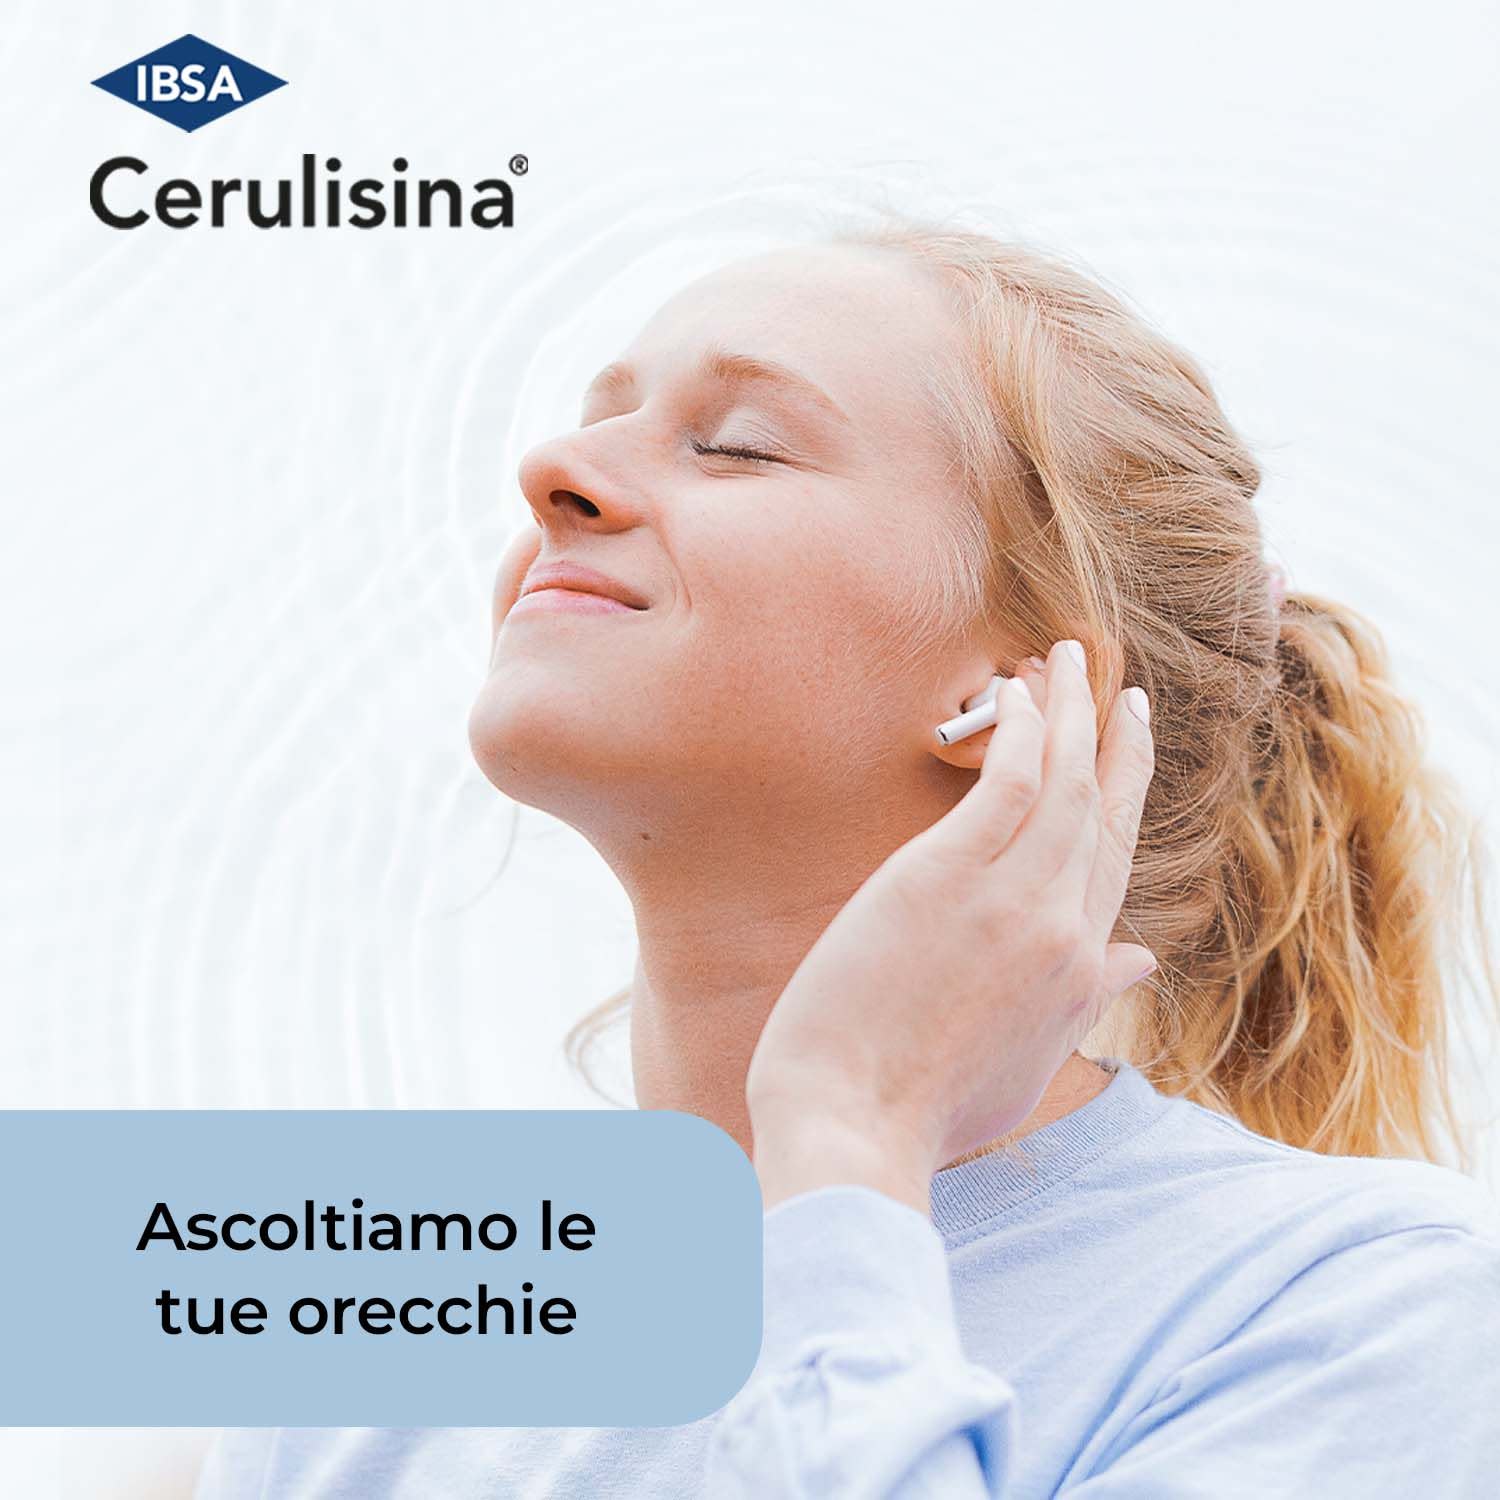 020157018 - Cerulisina Gocce Auricolari Soluzione 20ml - 1290907_3.jpg